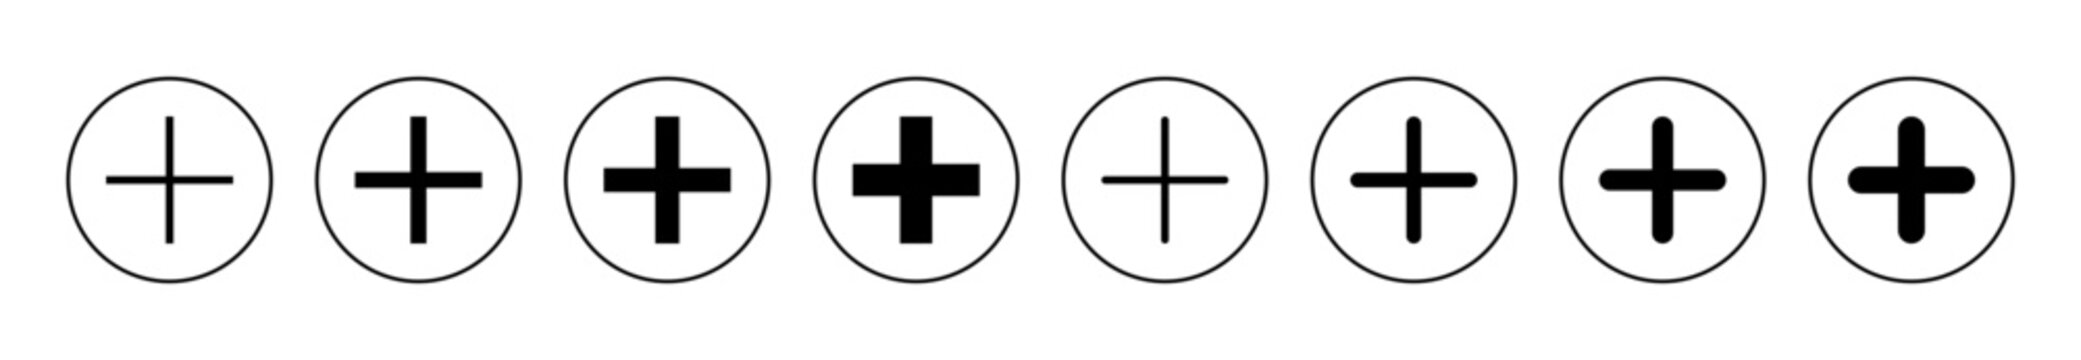 Plus Icon set vector. Add plus sign and symbol